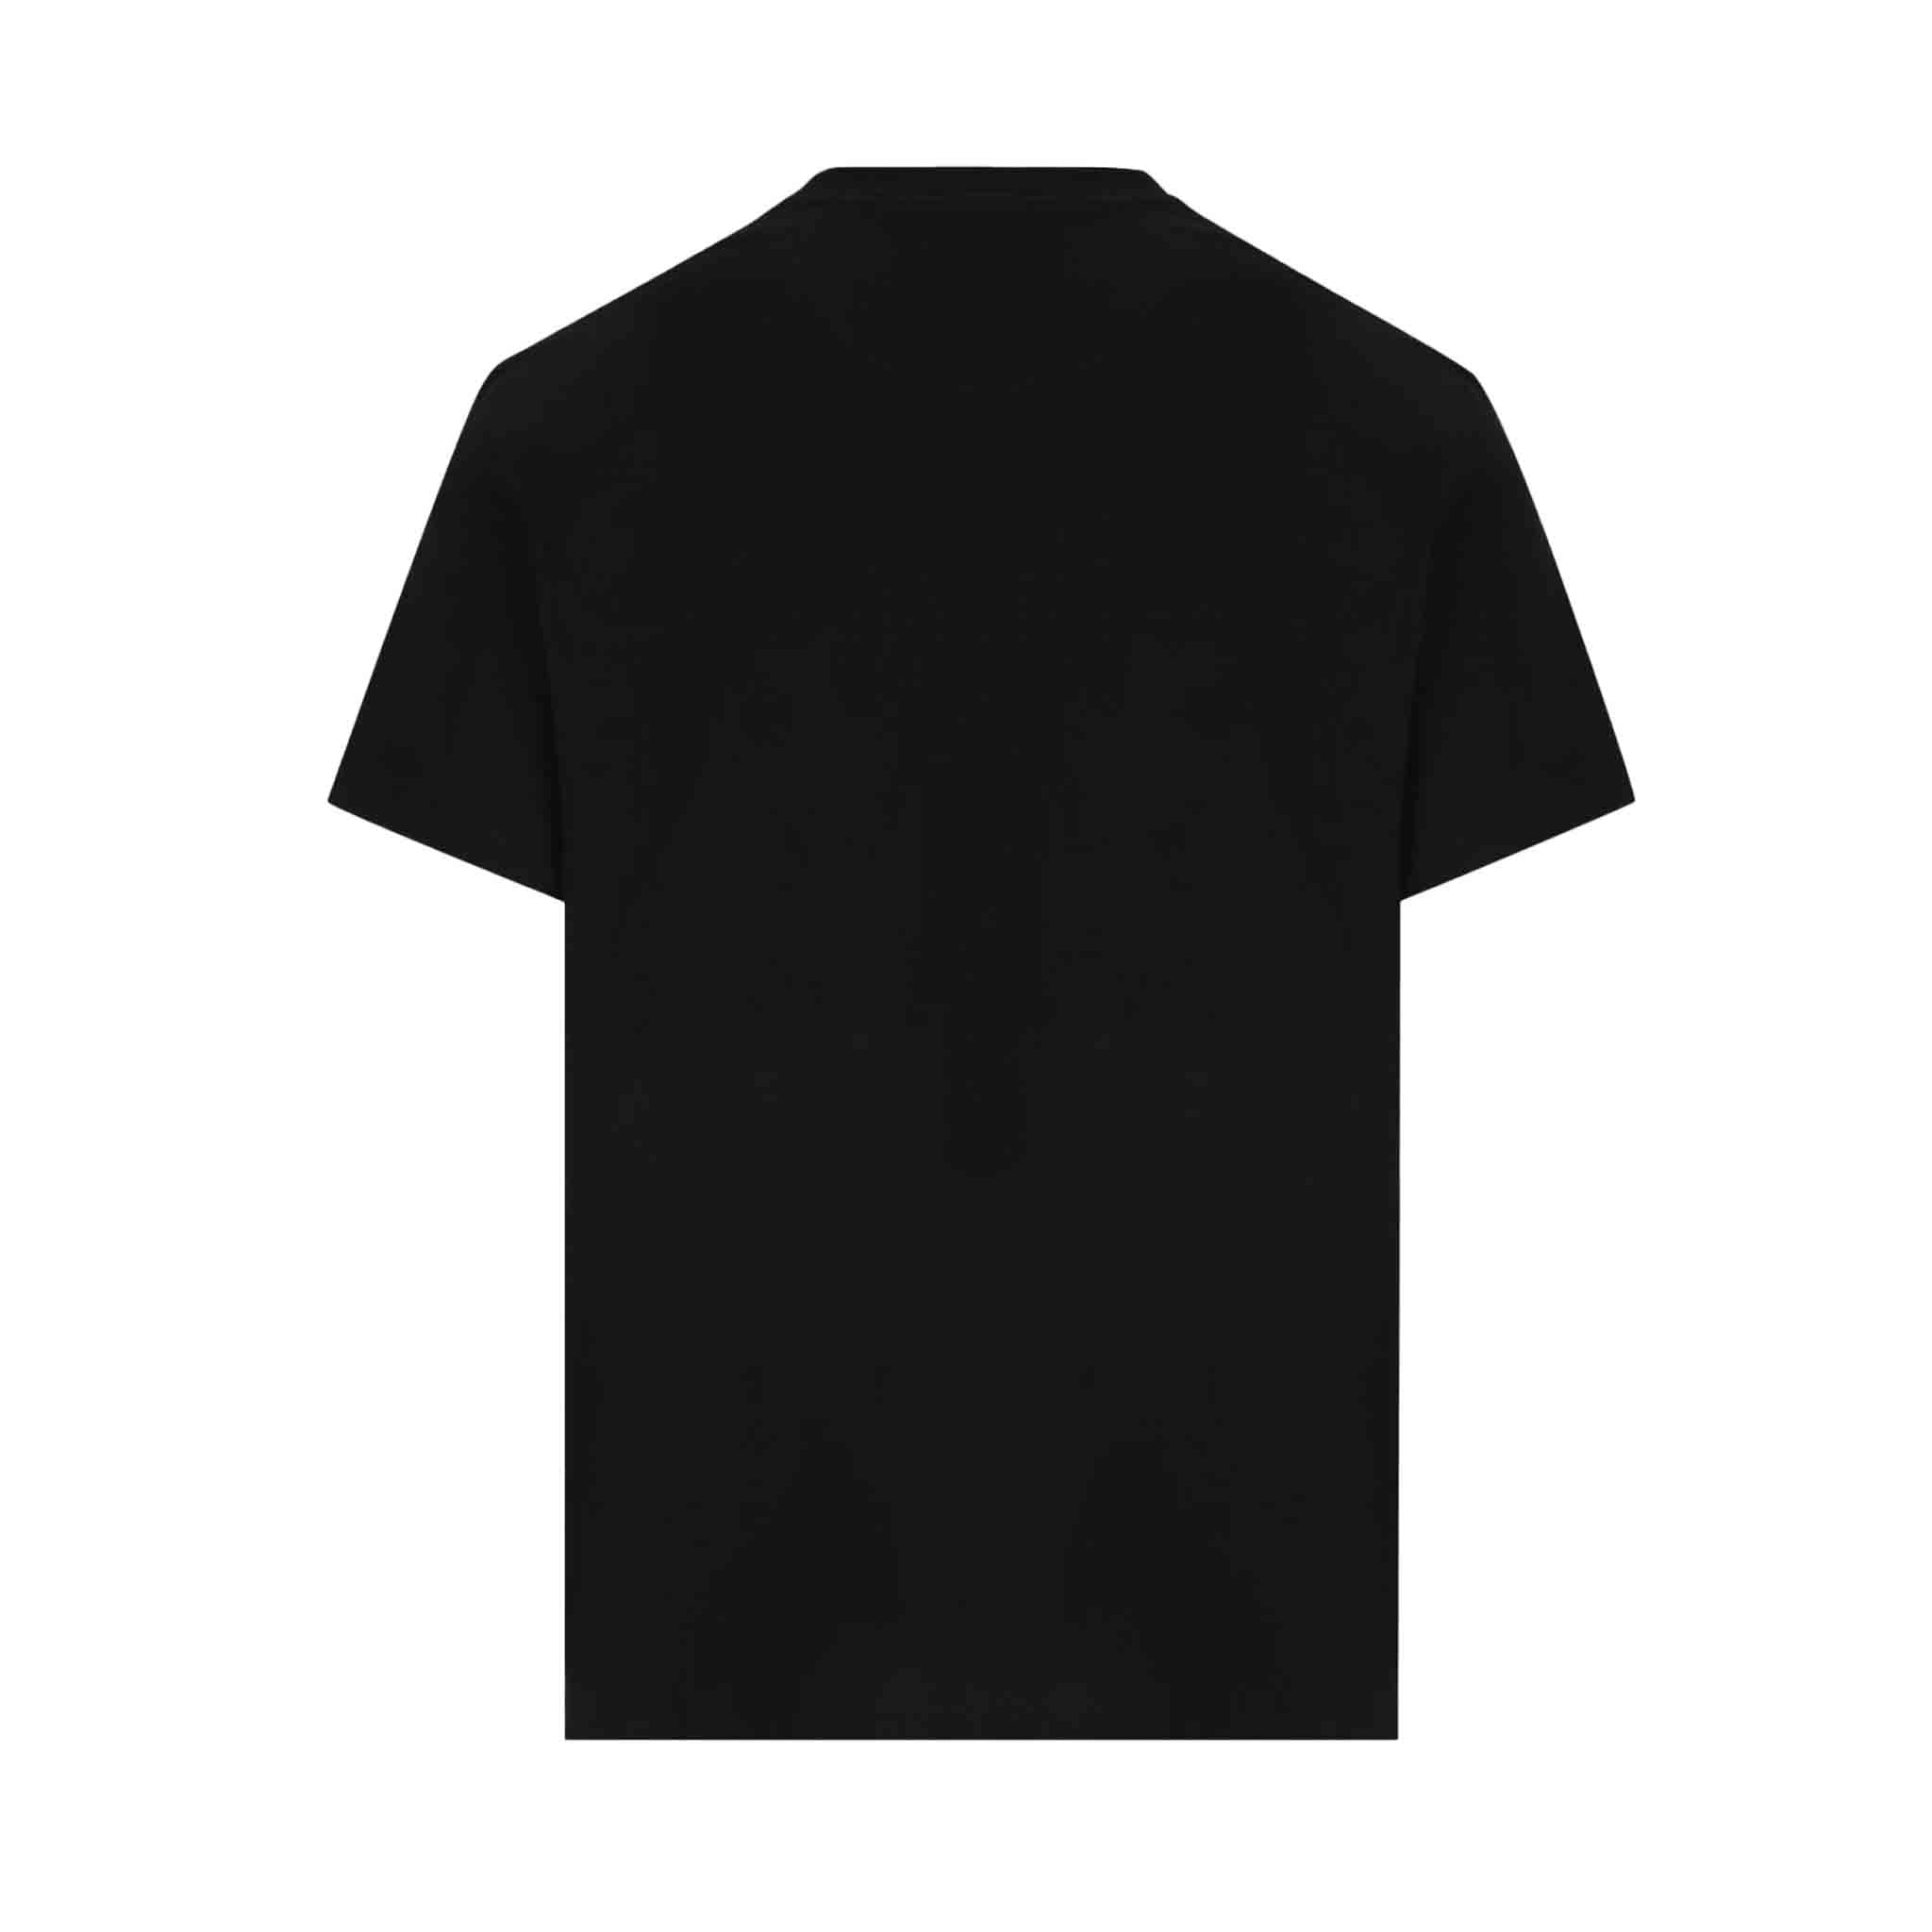 Valentino VLTN Logo Print T-Shirt in Black